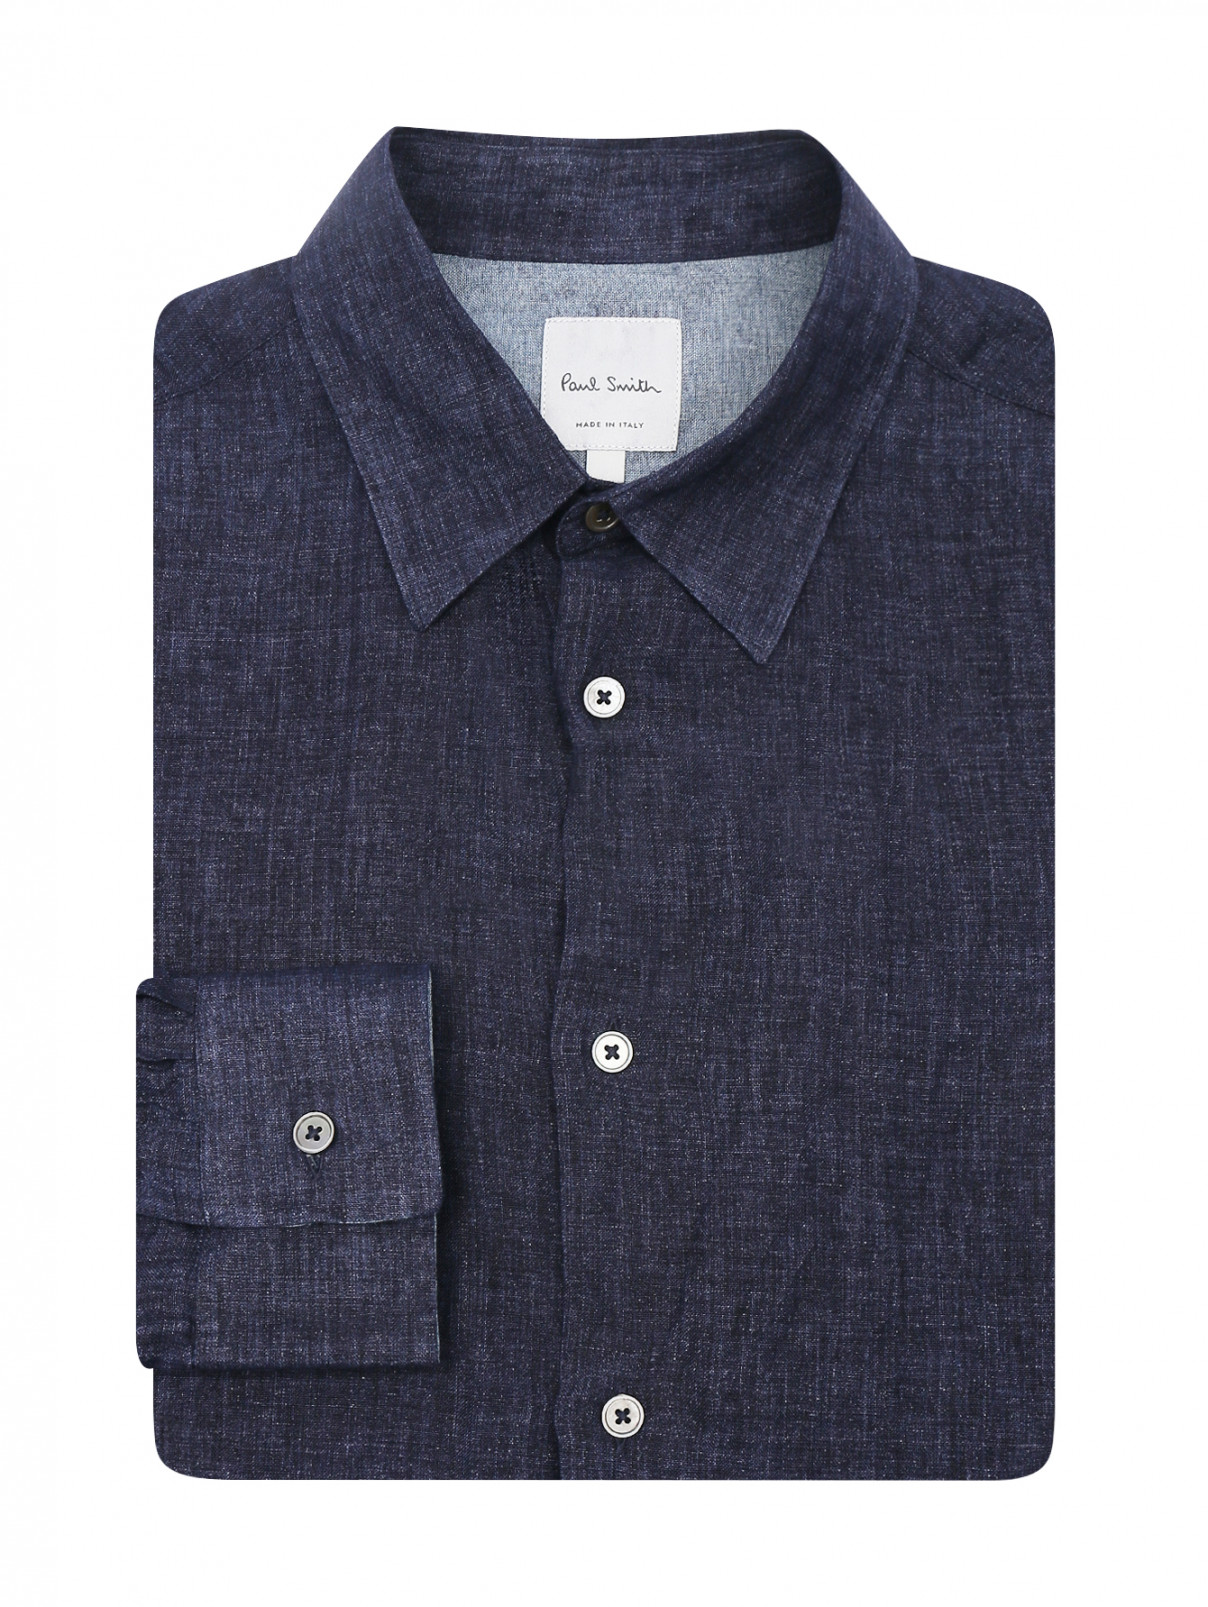 Рубашка из льна Paul Smith  –  Общий вид  – Цвет:  Синий